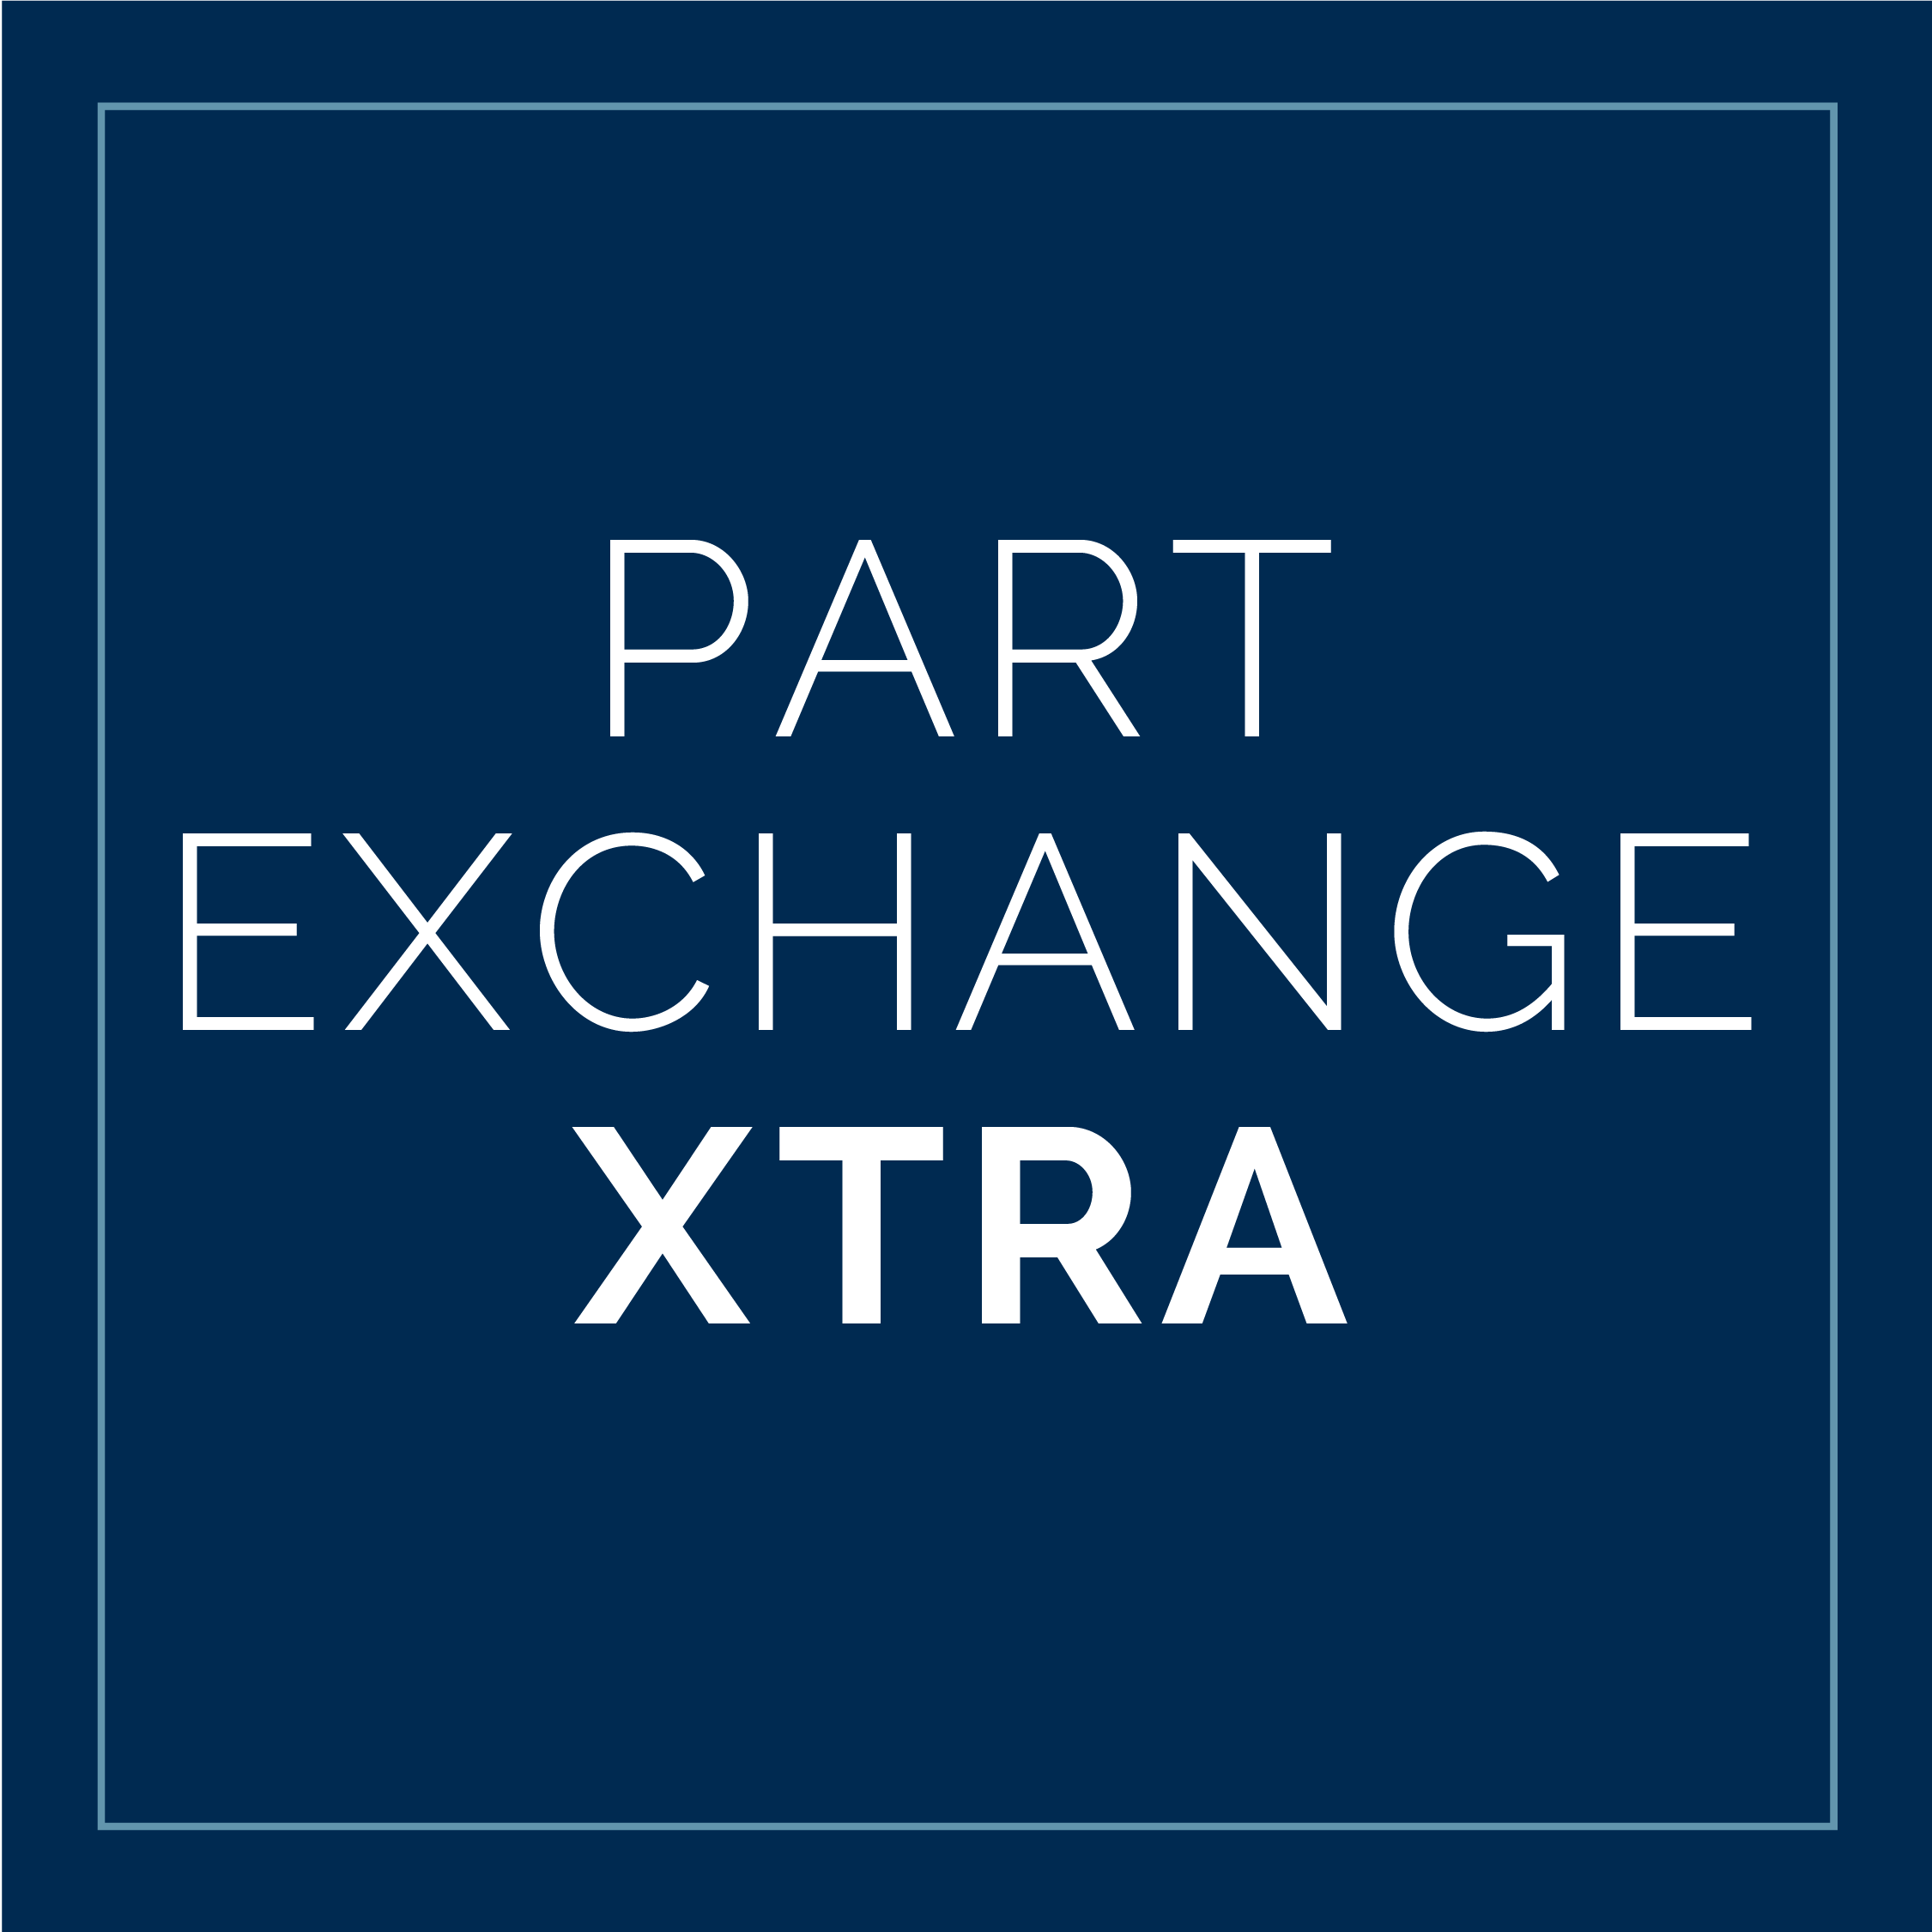 Part Exchange Xtra Lockup - David Wilson Homes